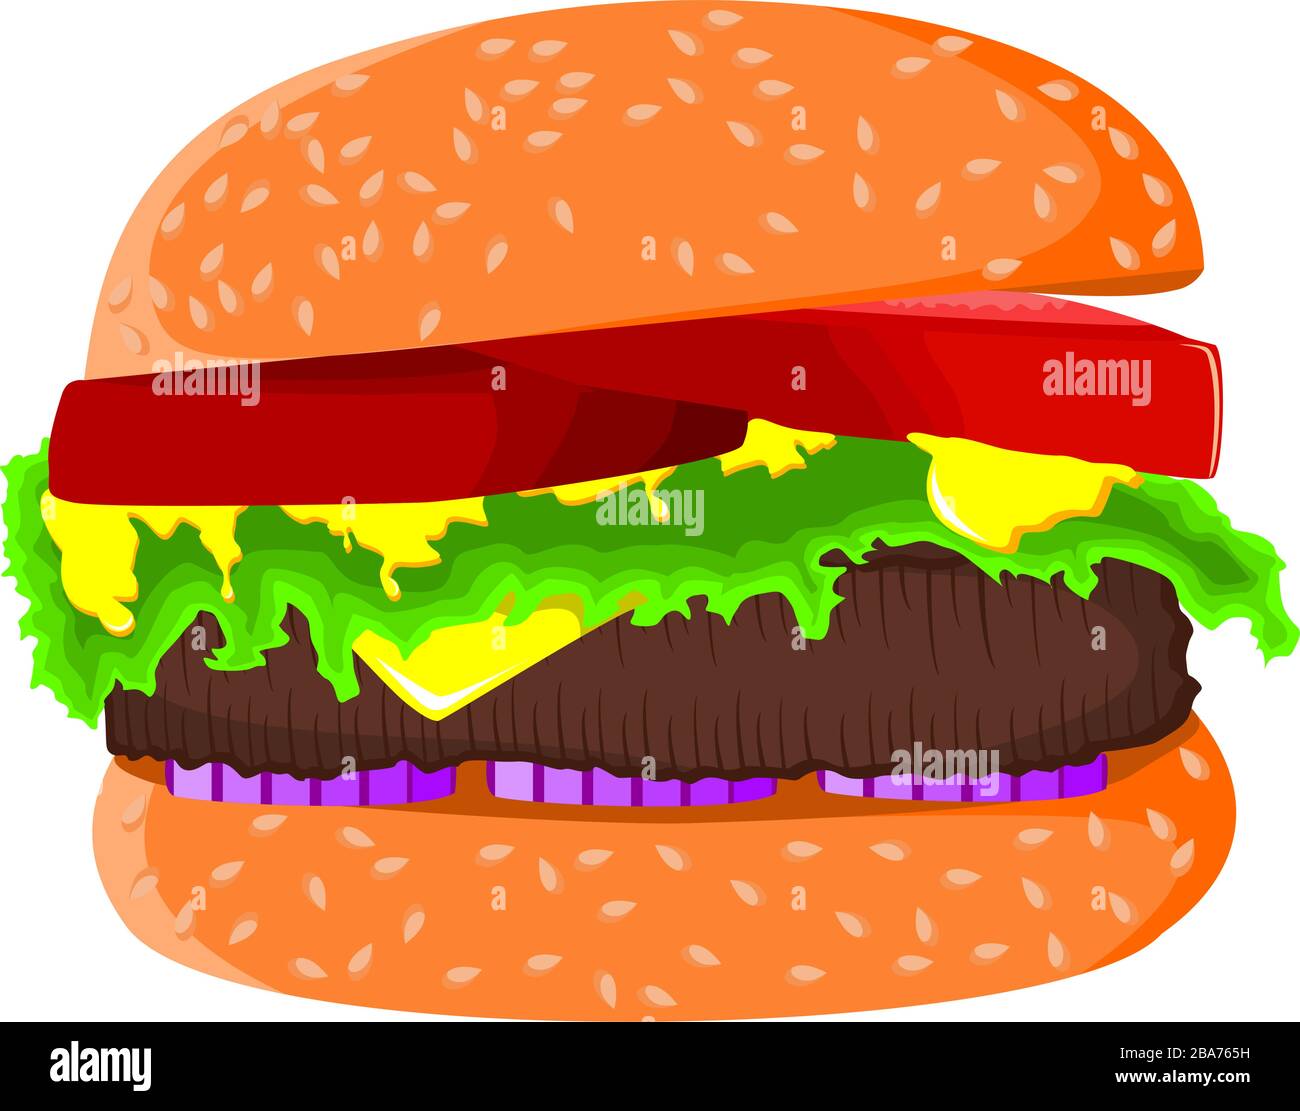 Burger Vektorgrafiken, Hamburger, Cheeseburger Illustrationsvektor auf weißem Hintergrund Stock Vektor